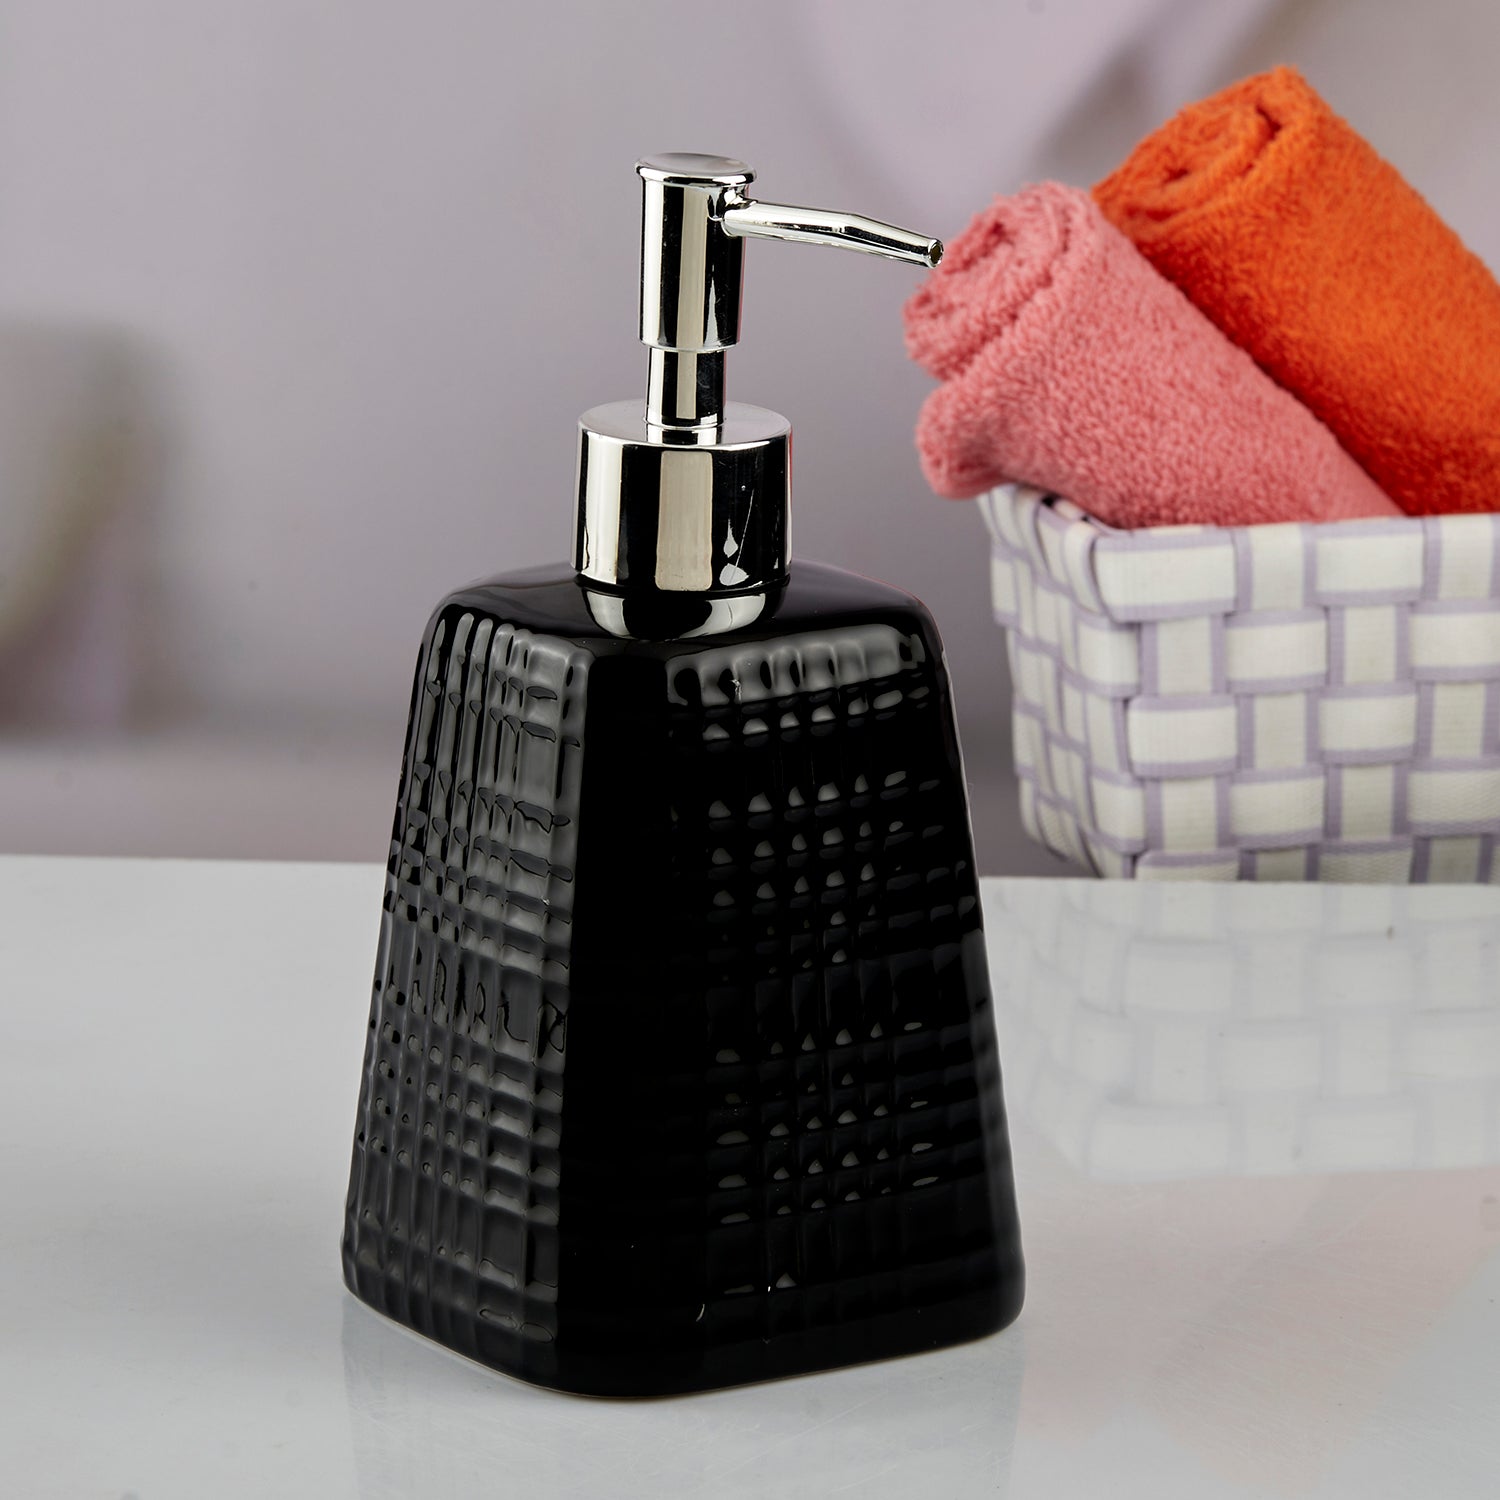 Ceramic Soap Dispenser liquid handwash pump for Bathroom, Set of 1, Black (10601)